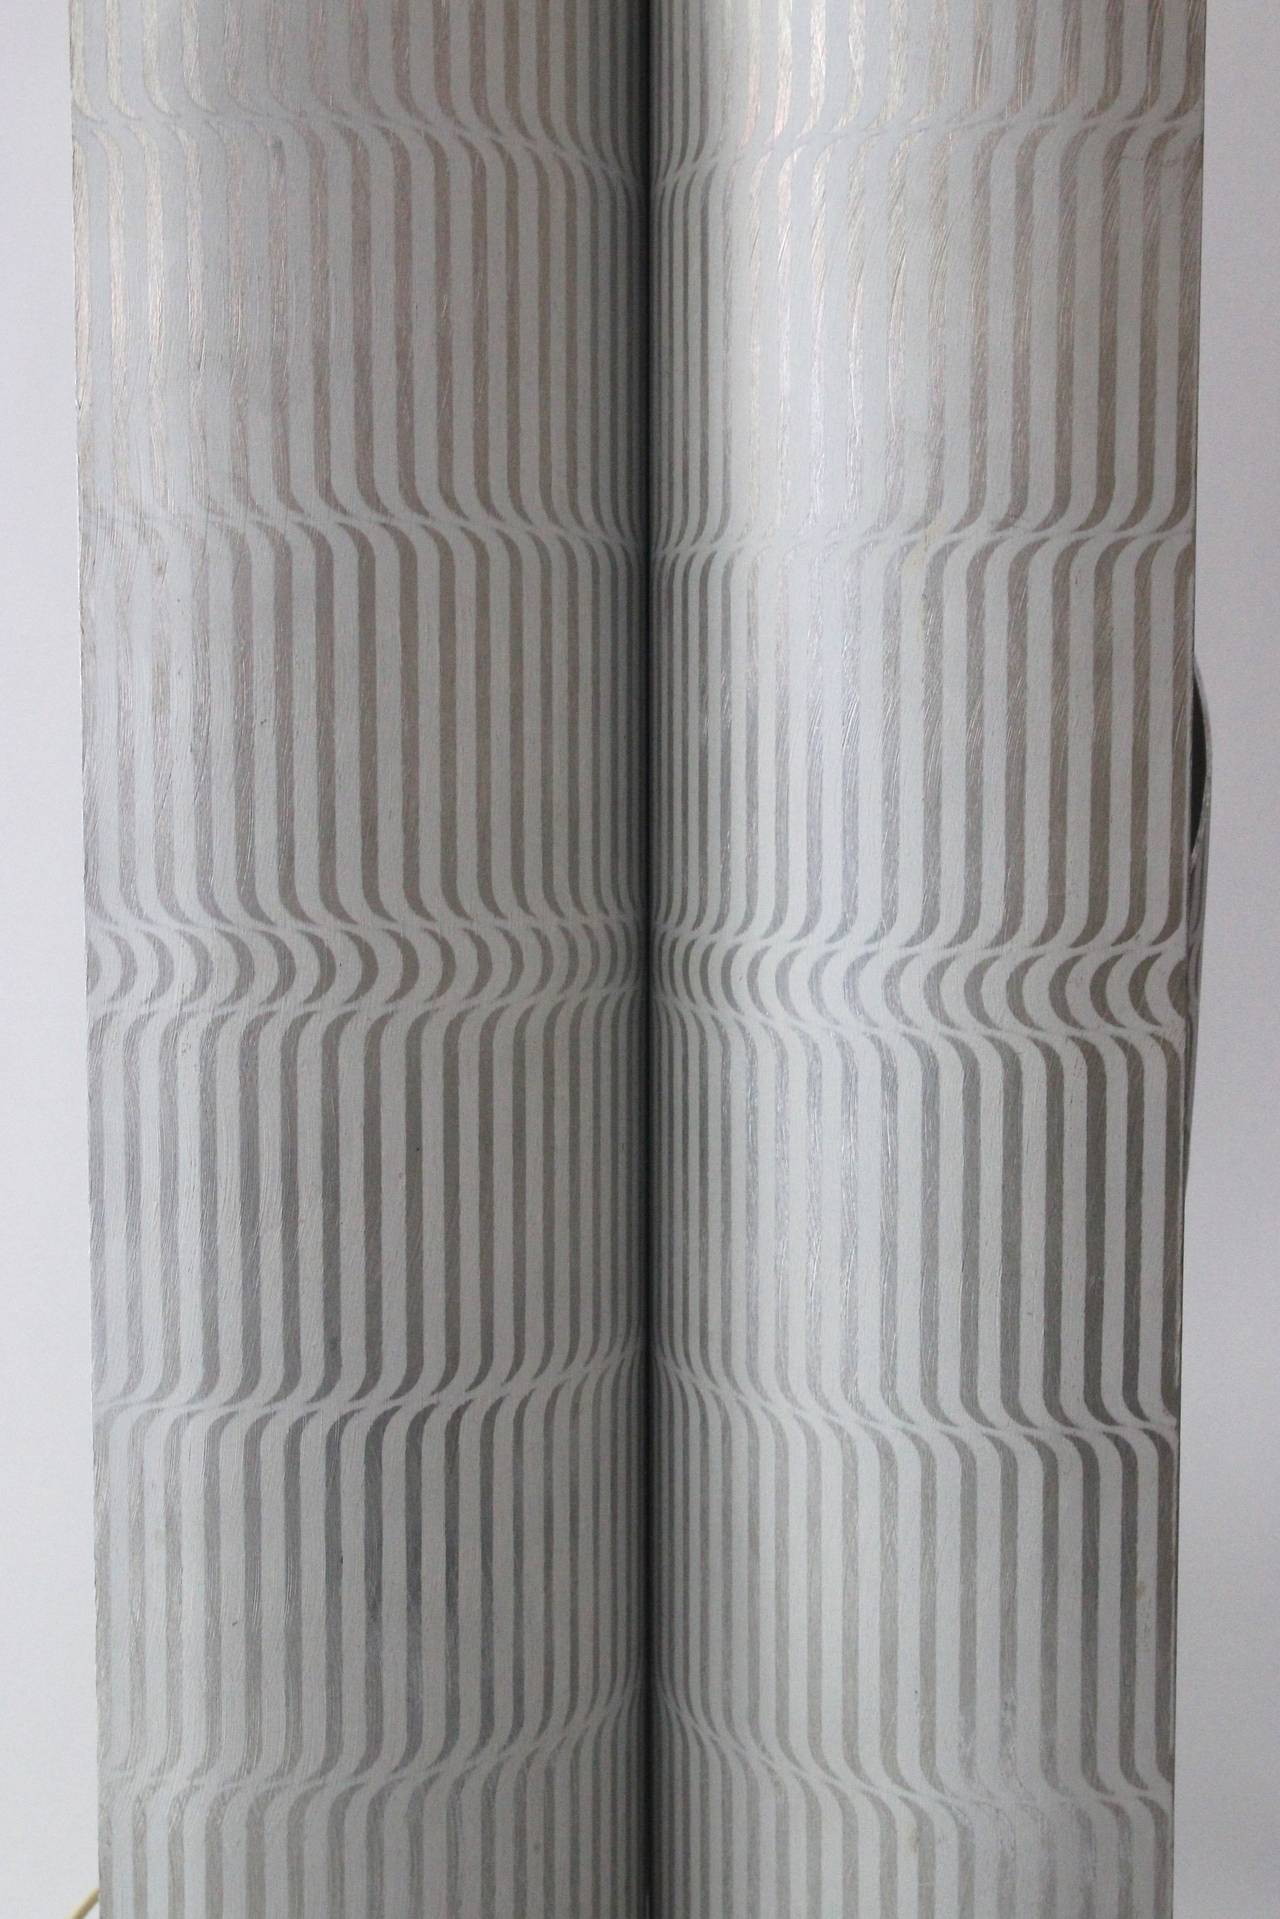 Lorenzo Burchiellaro Aluminium Floor Lamp, circa 1970 Italy 2